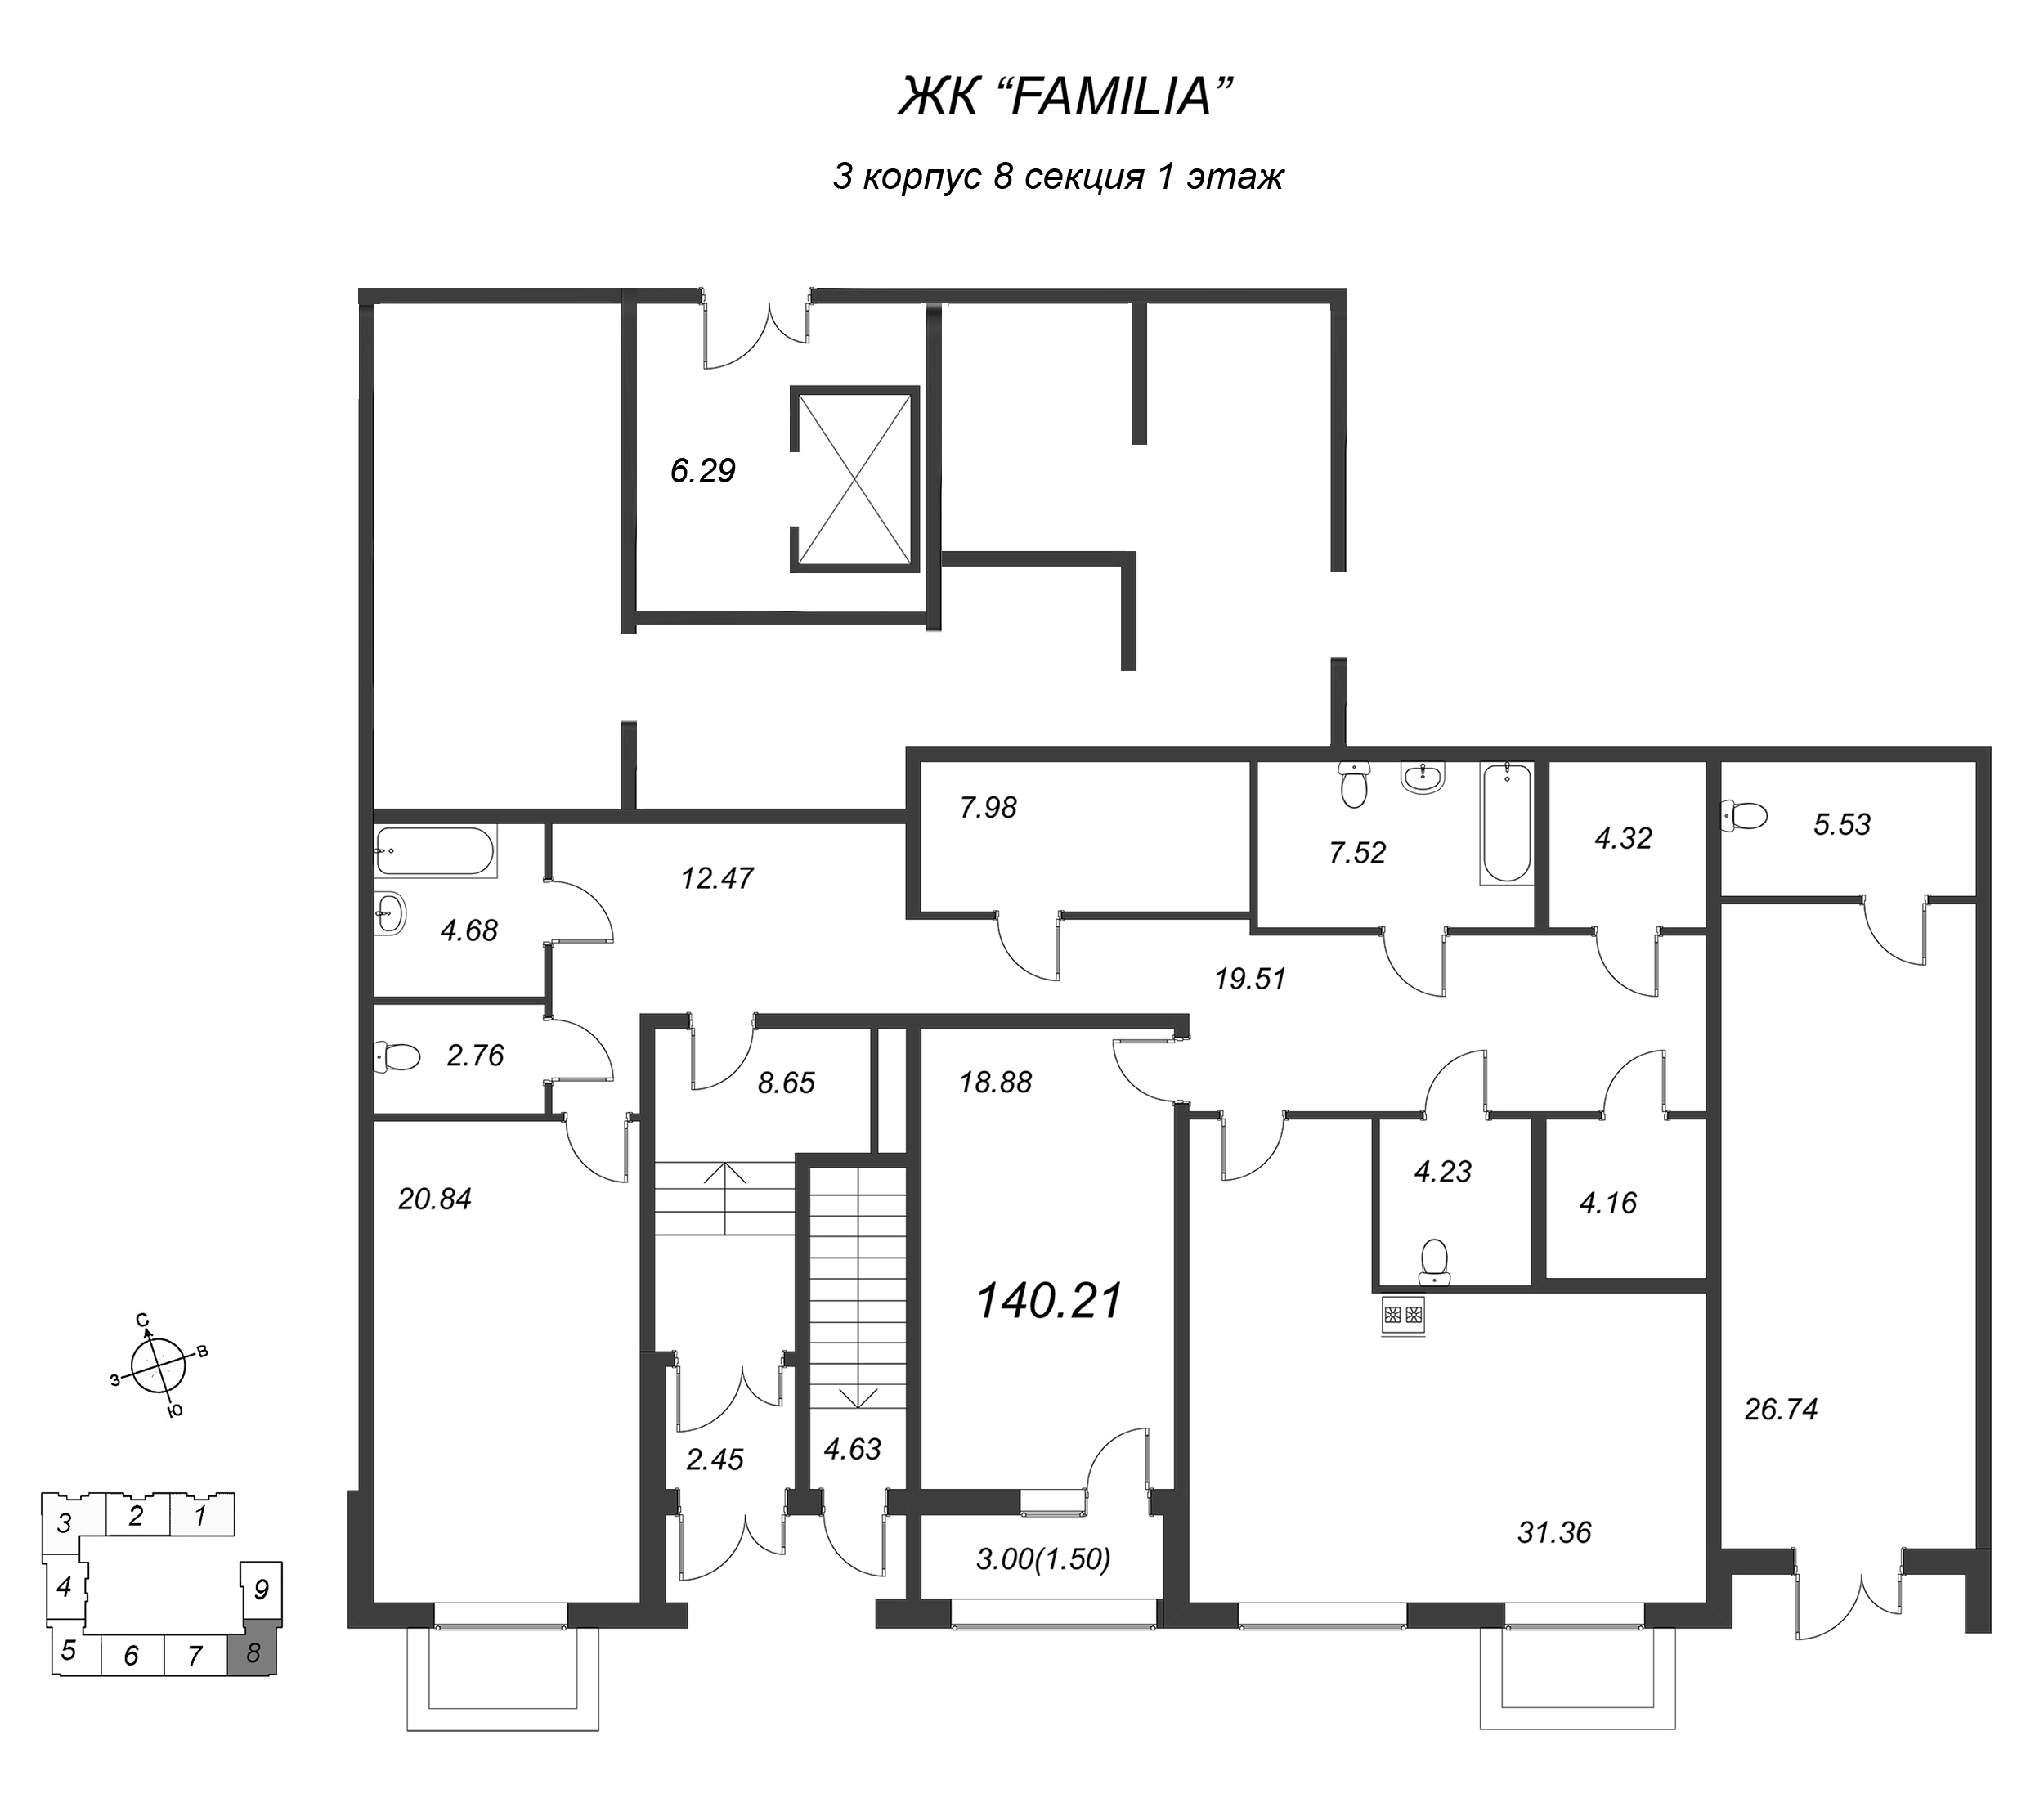 3-комнатная (Евро) квартира, 140.3 м² в ЖК "FAMILIA" - планировка этажа